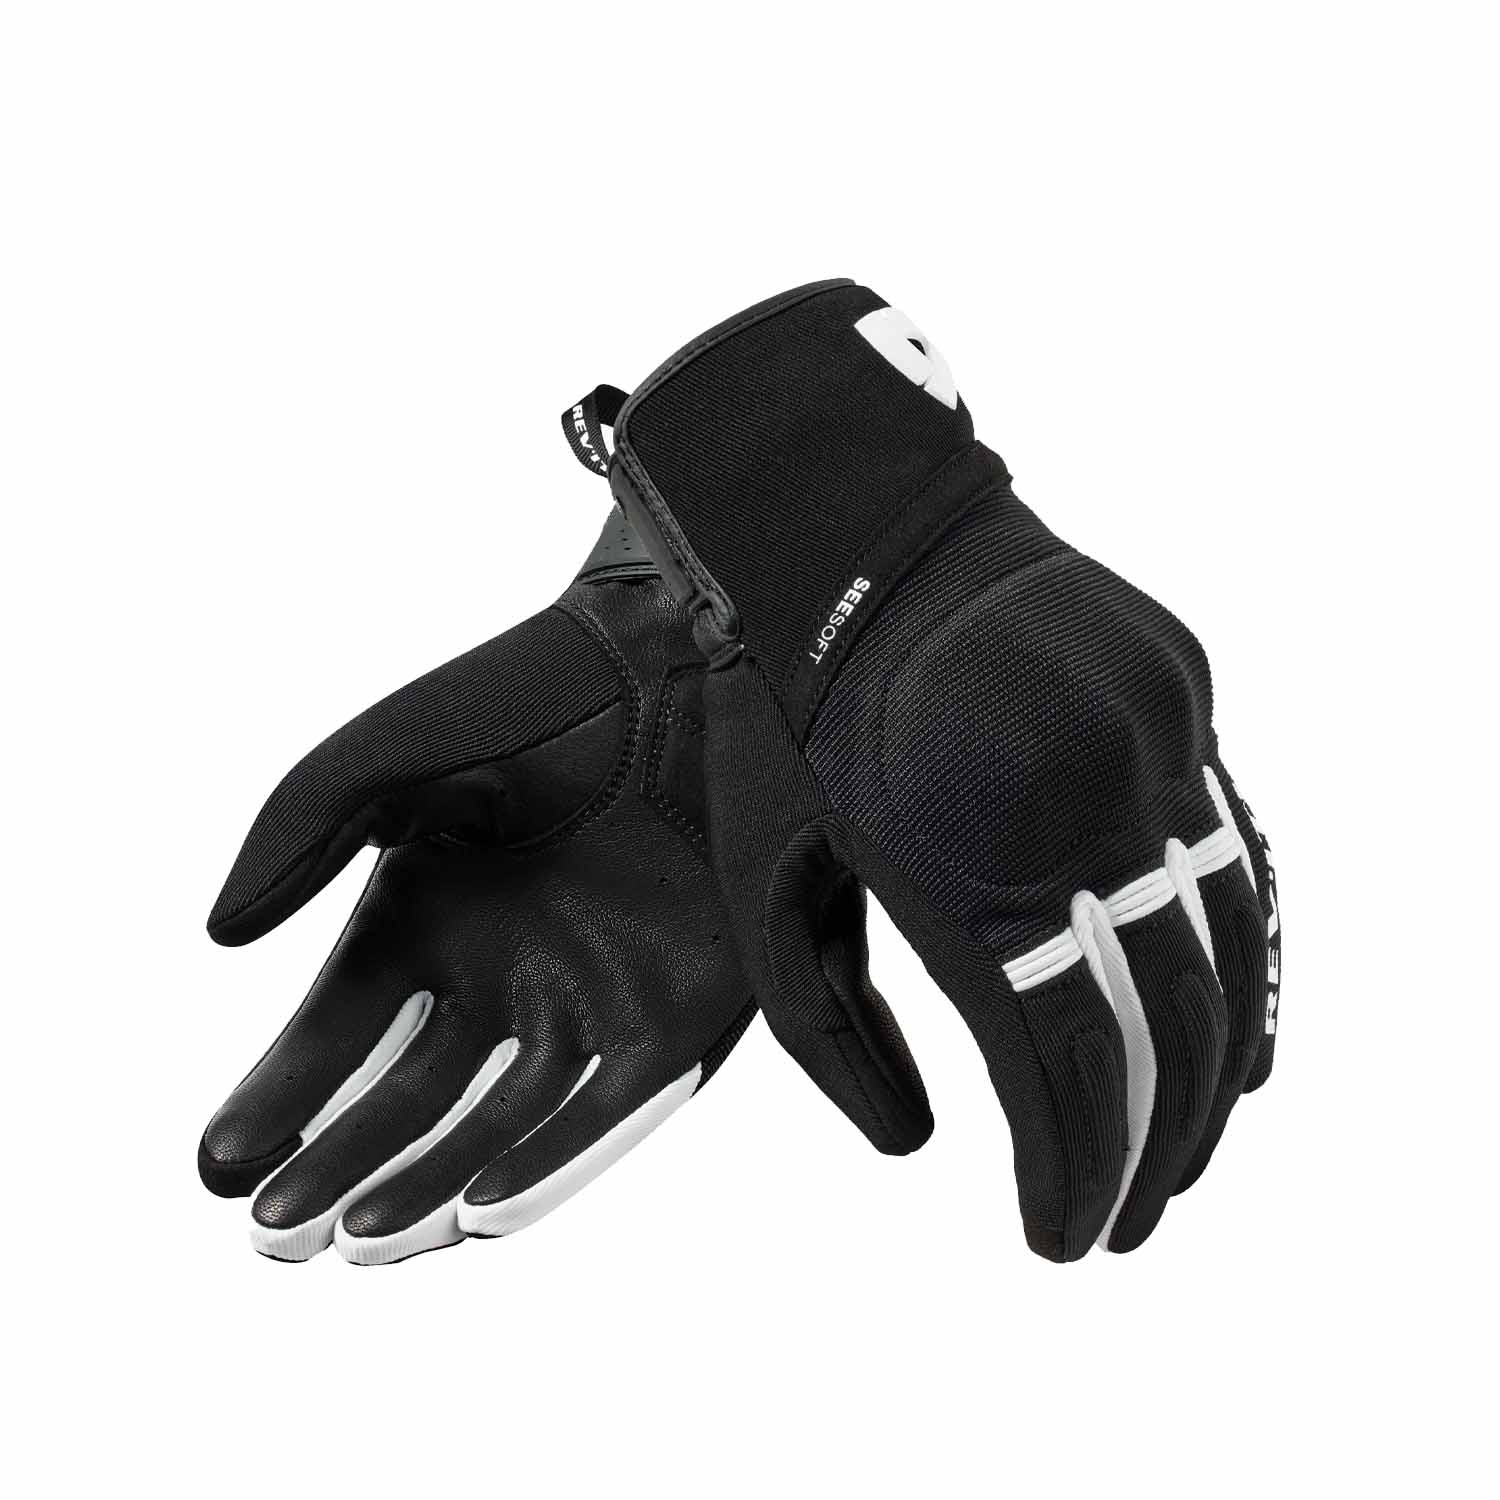 Image of EU REV'IT! Mosca 2 Gloves Black White Taille XL